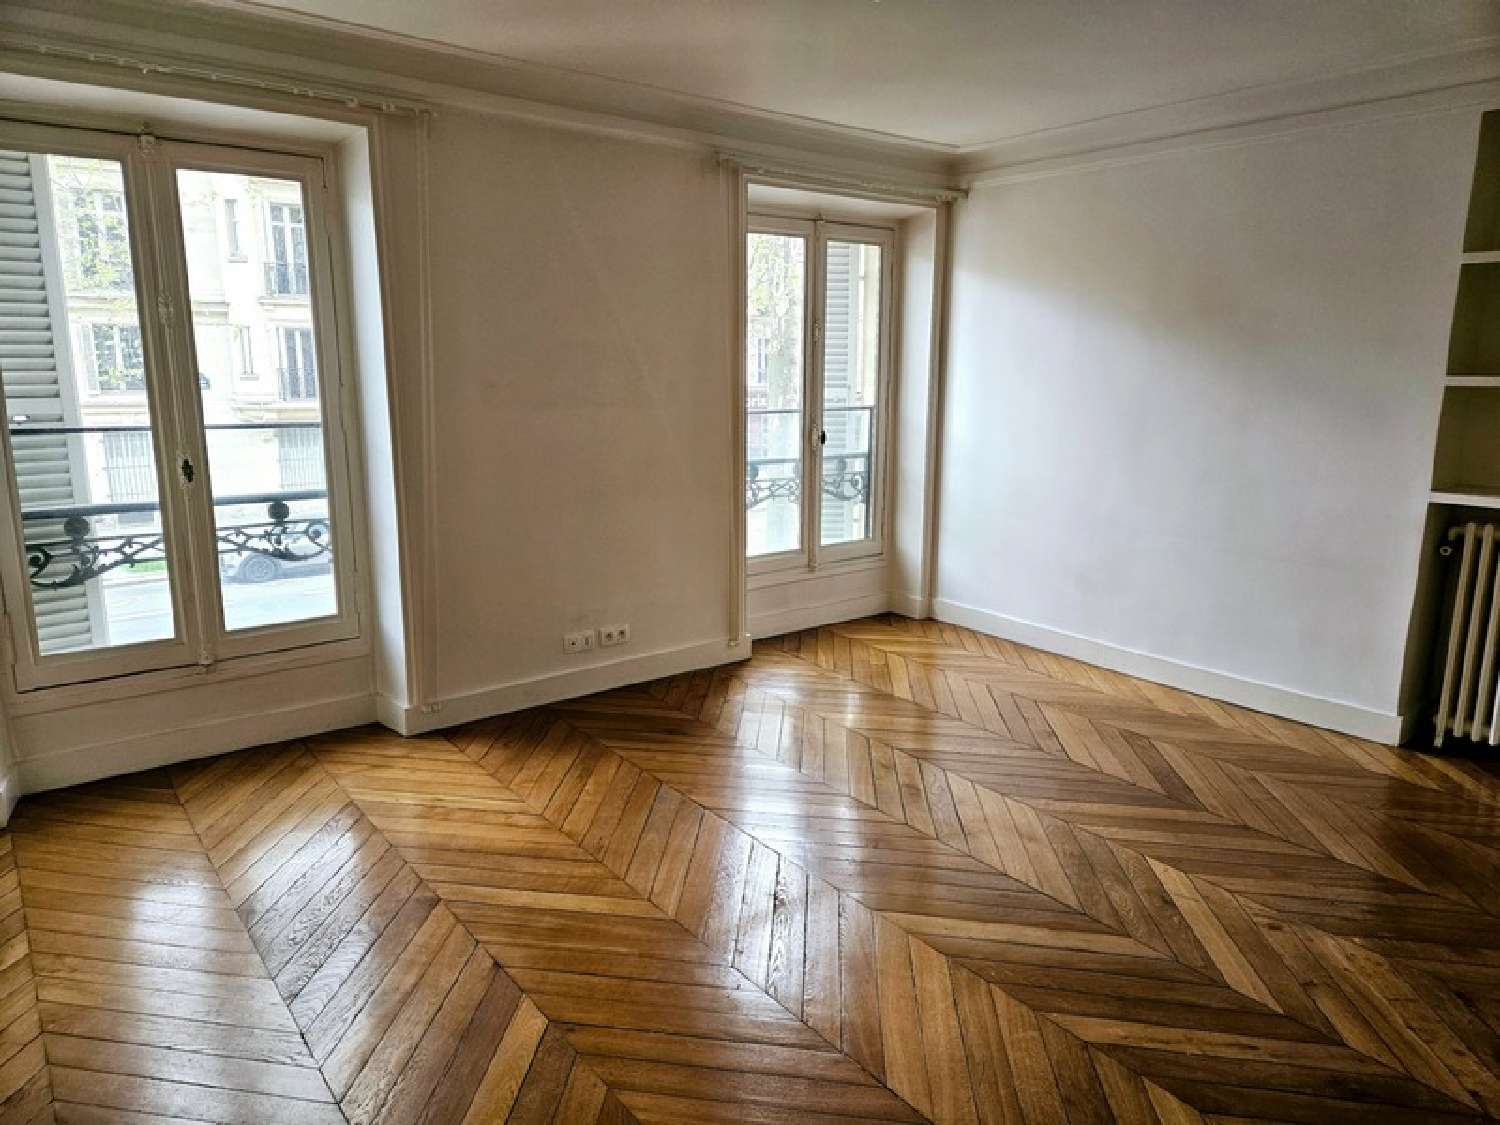  te koop appartement Paris 17e Arrondissement Parijs (Seine) 3